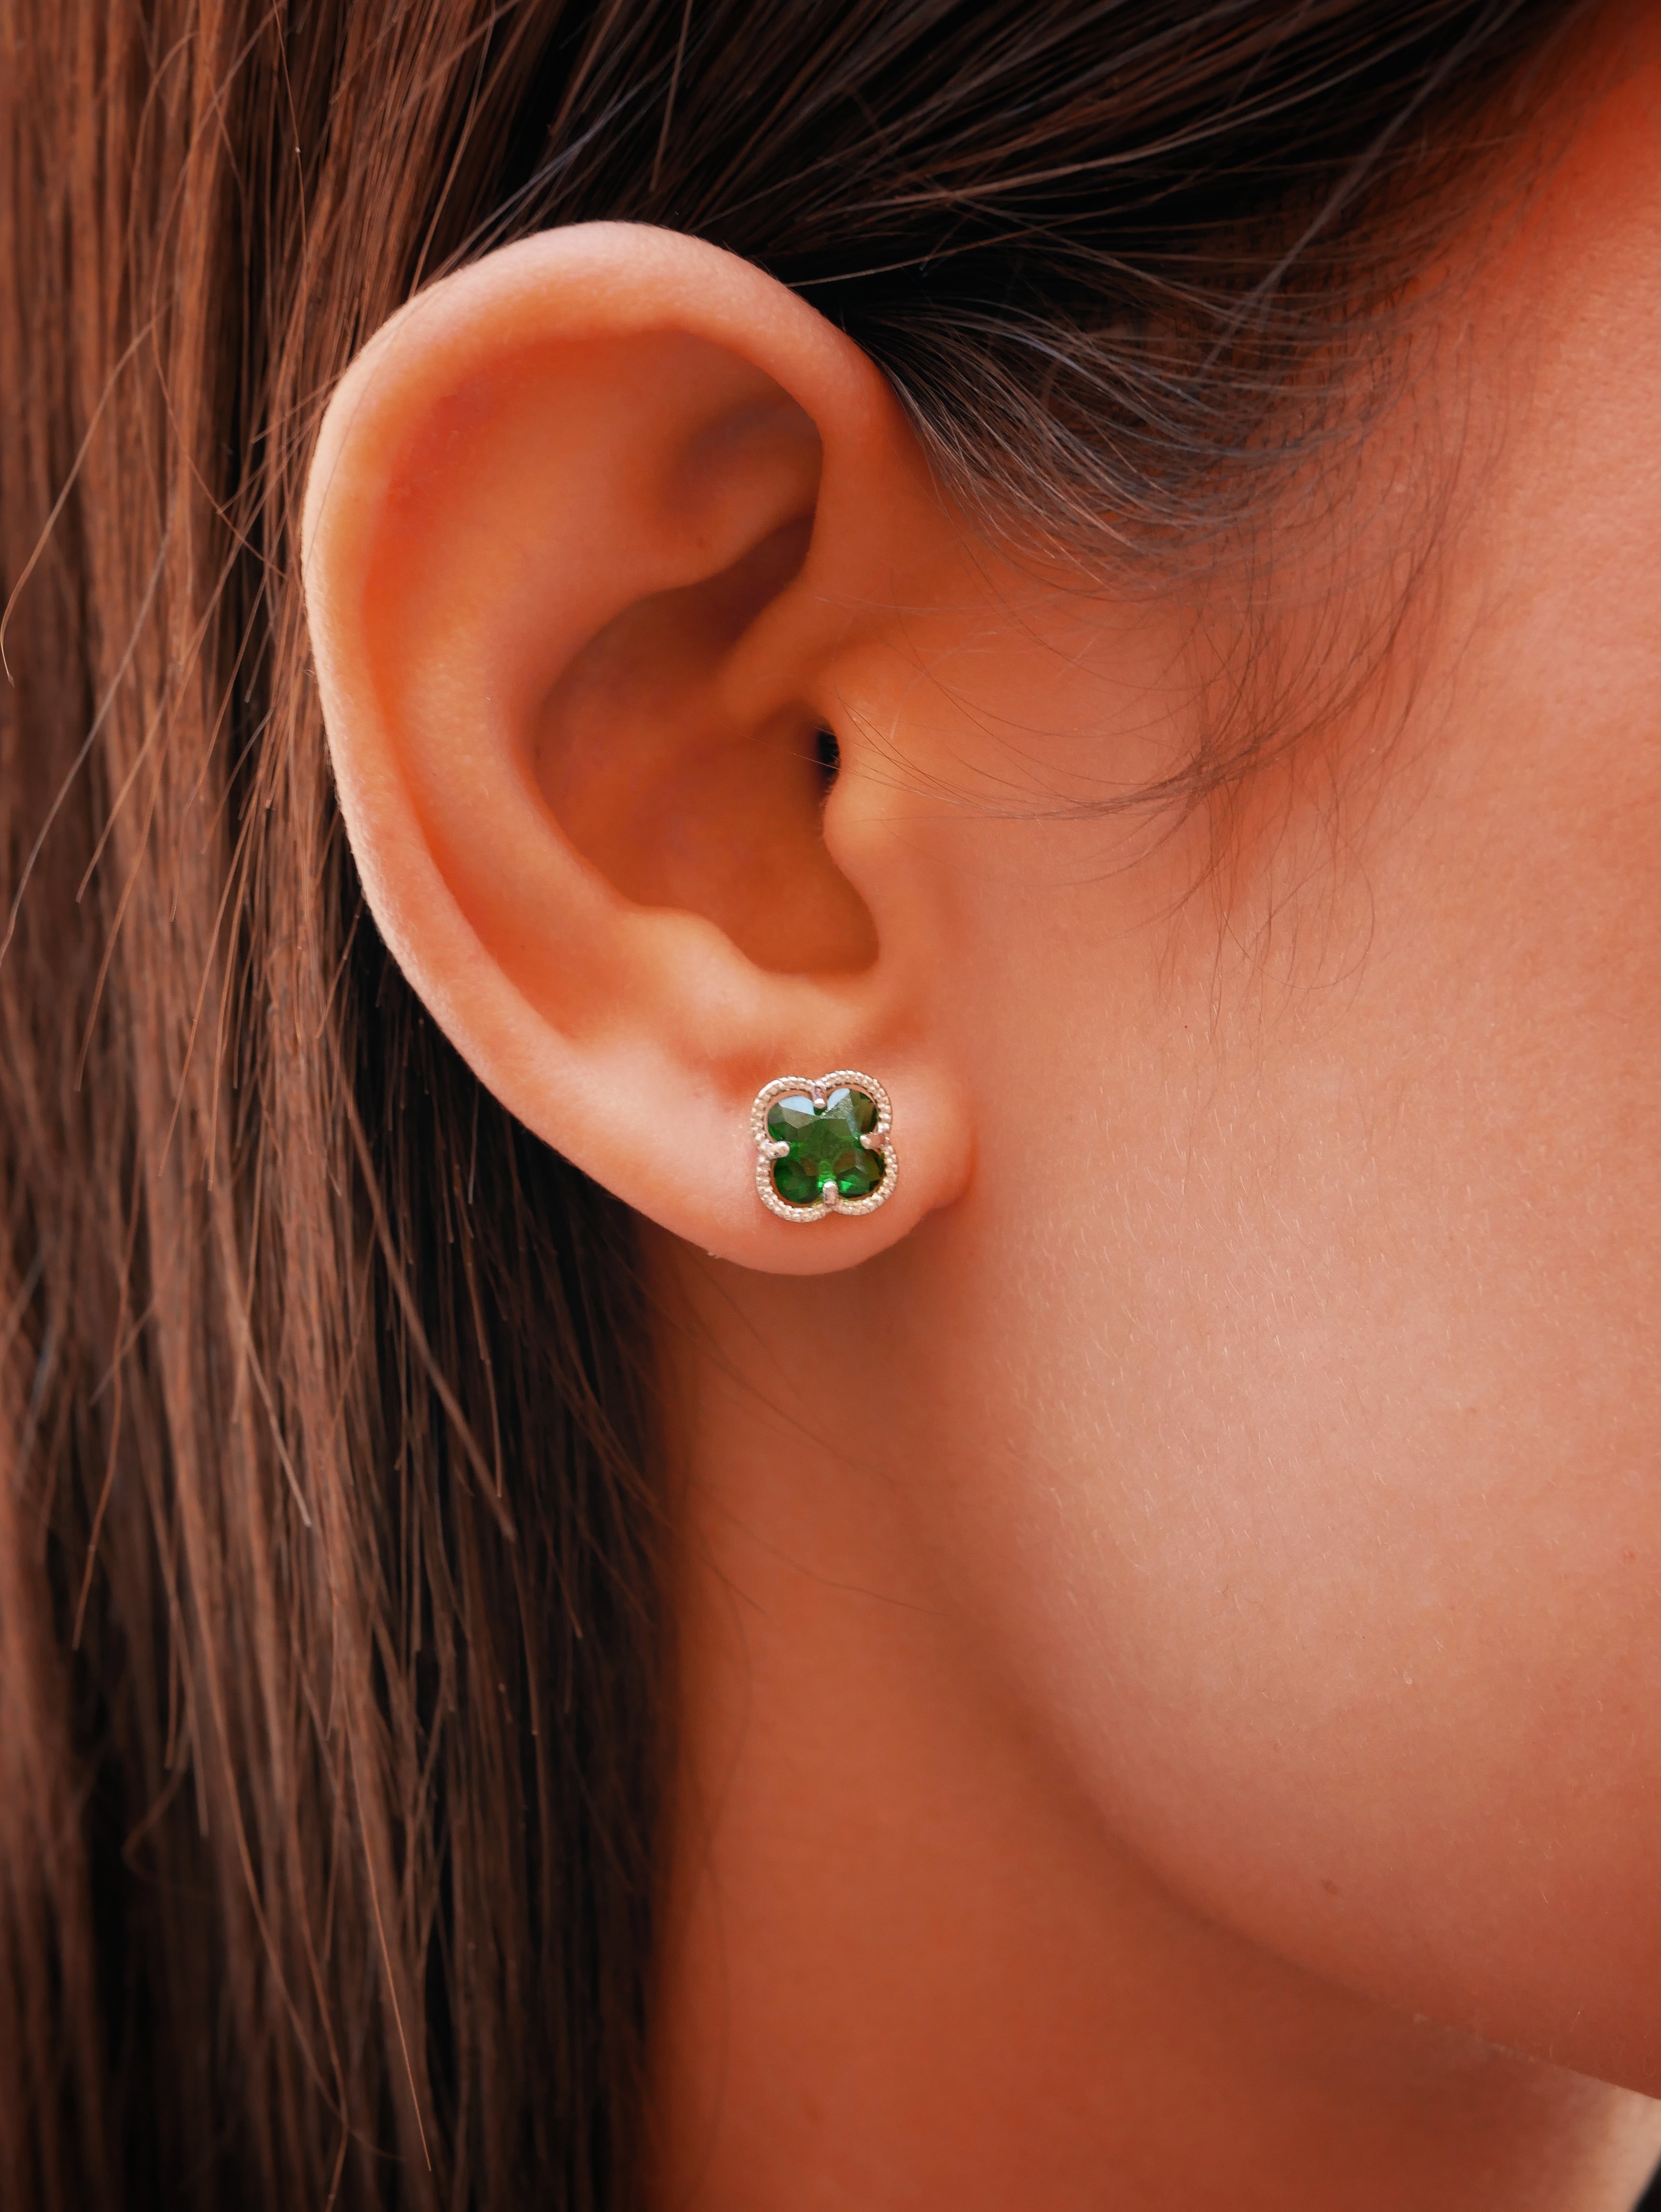 Cloverleaf earrings with emerald quartz